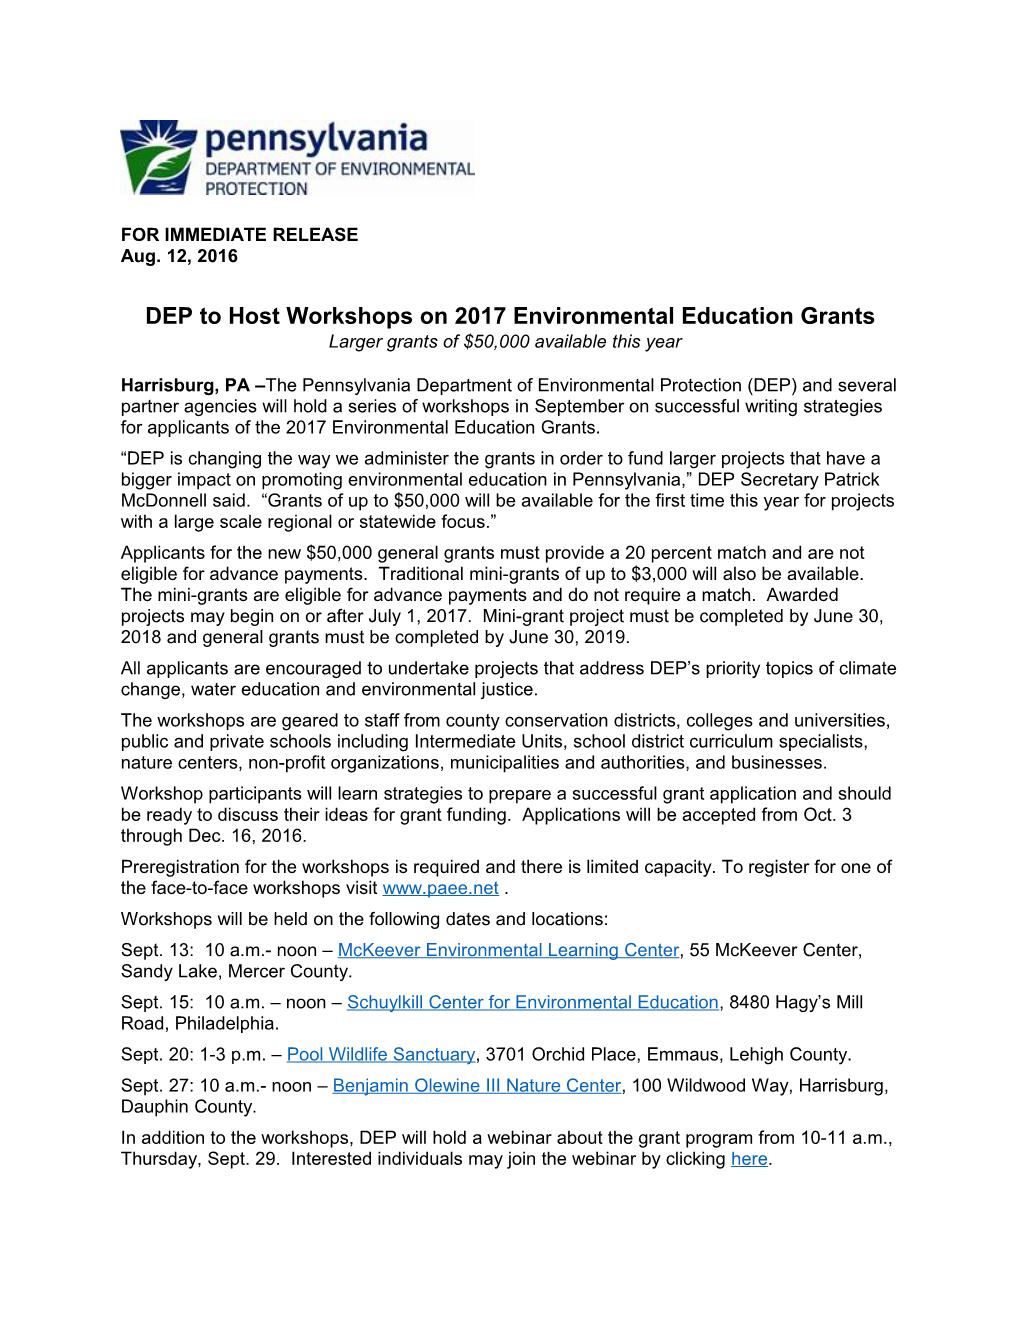 DEP to Host Workshopson 2017 Environmental Education Grants